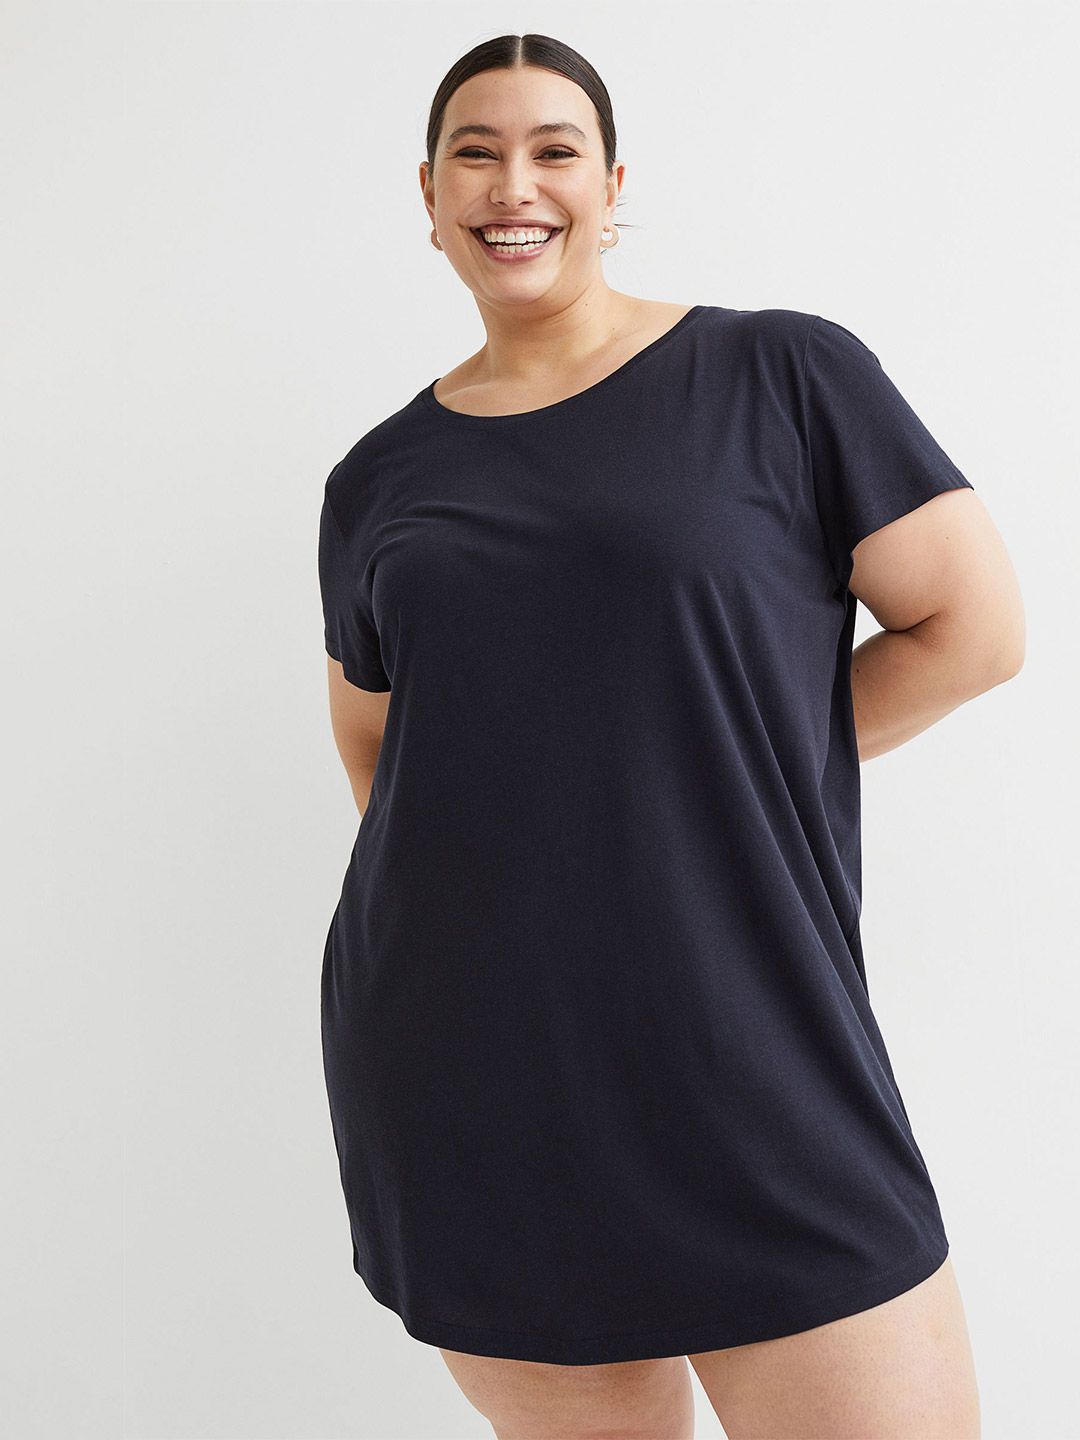 H&M Women Plus Size Navy Blue Modal-Blend T-shirt Dress Price in India